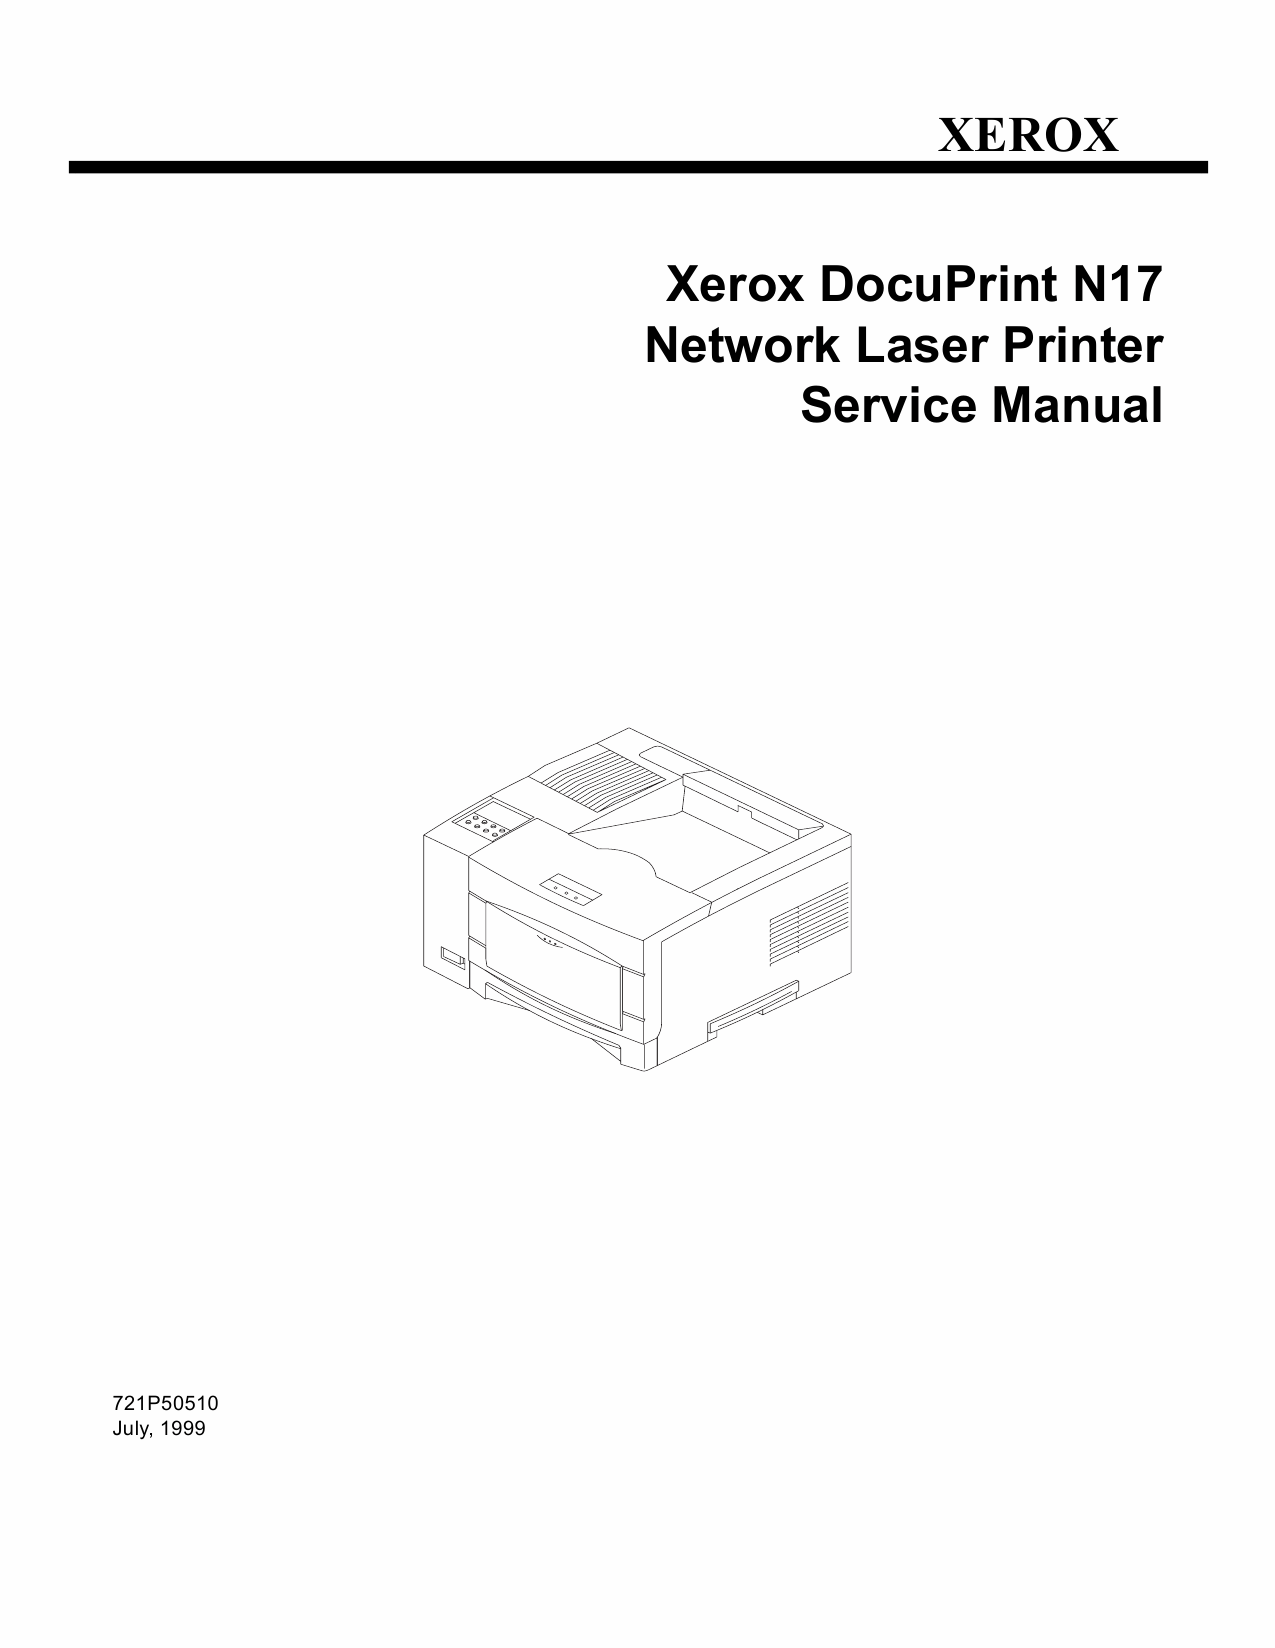 Xerox DocuPrint N17 Parts List and Service Manual-1